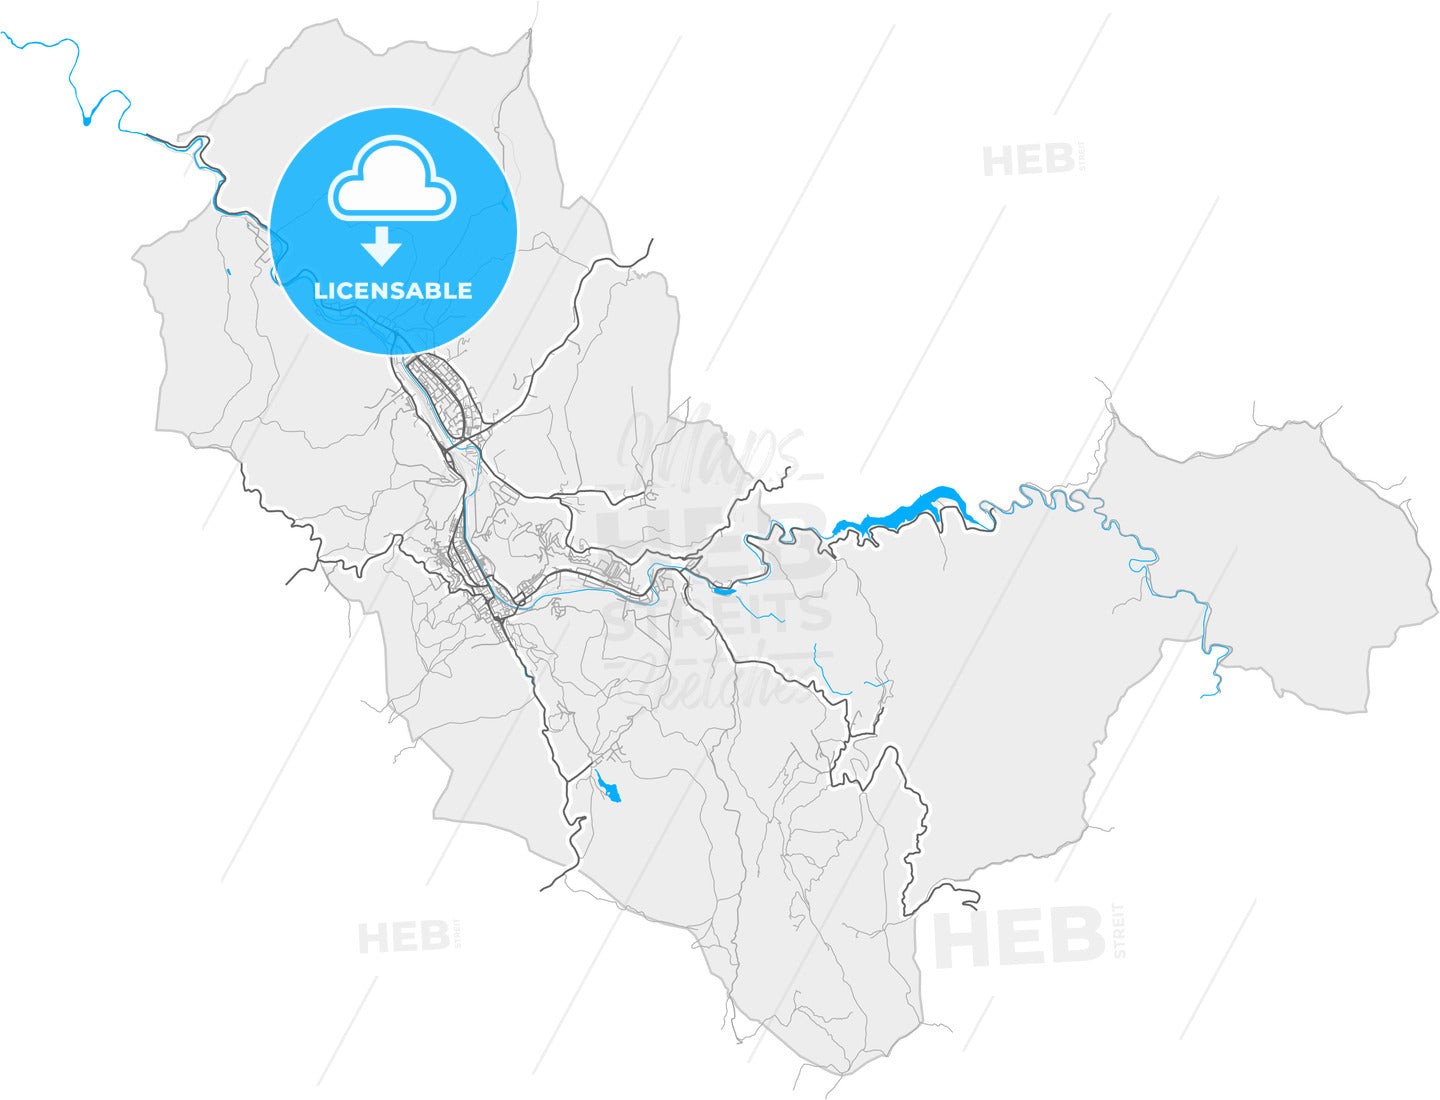 Reșița, Caraș-Severin, Romania, high quality vector map